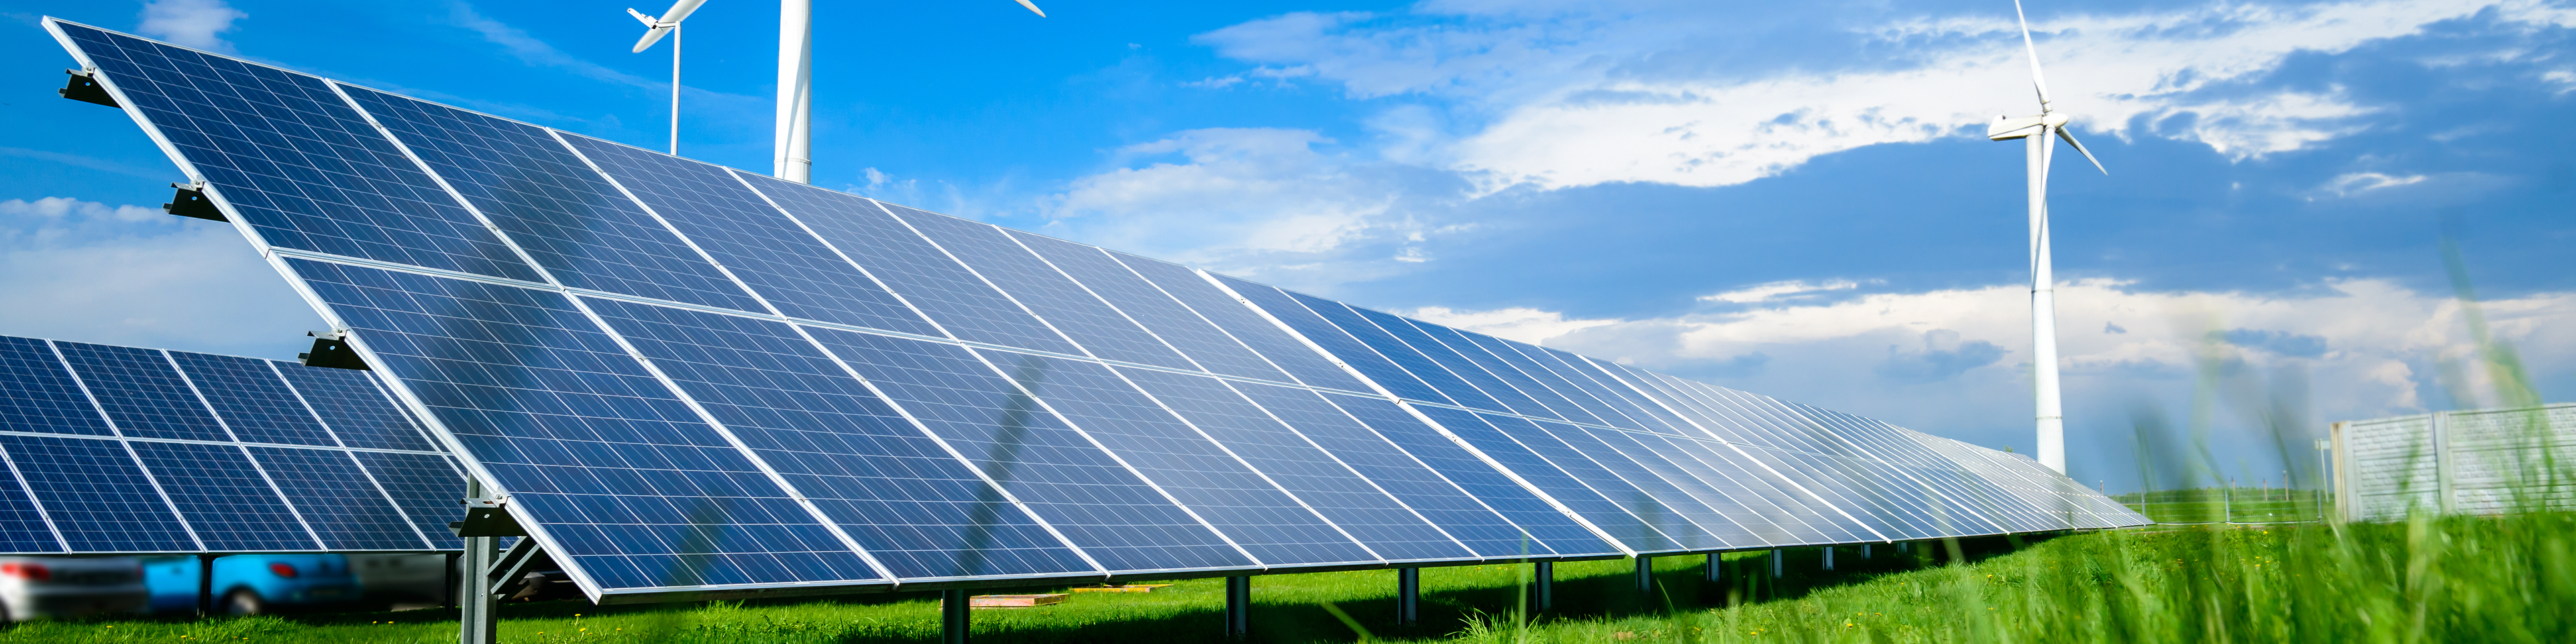 Understanding solar risk mitigation for lenders